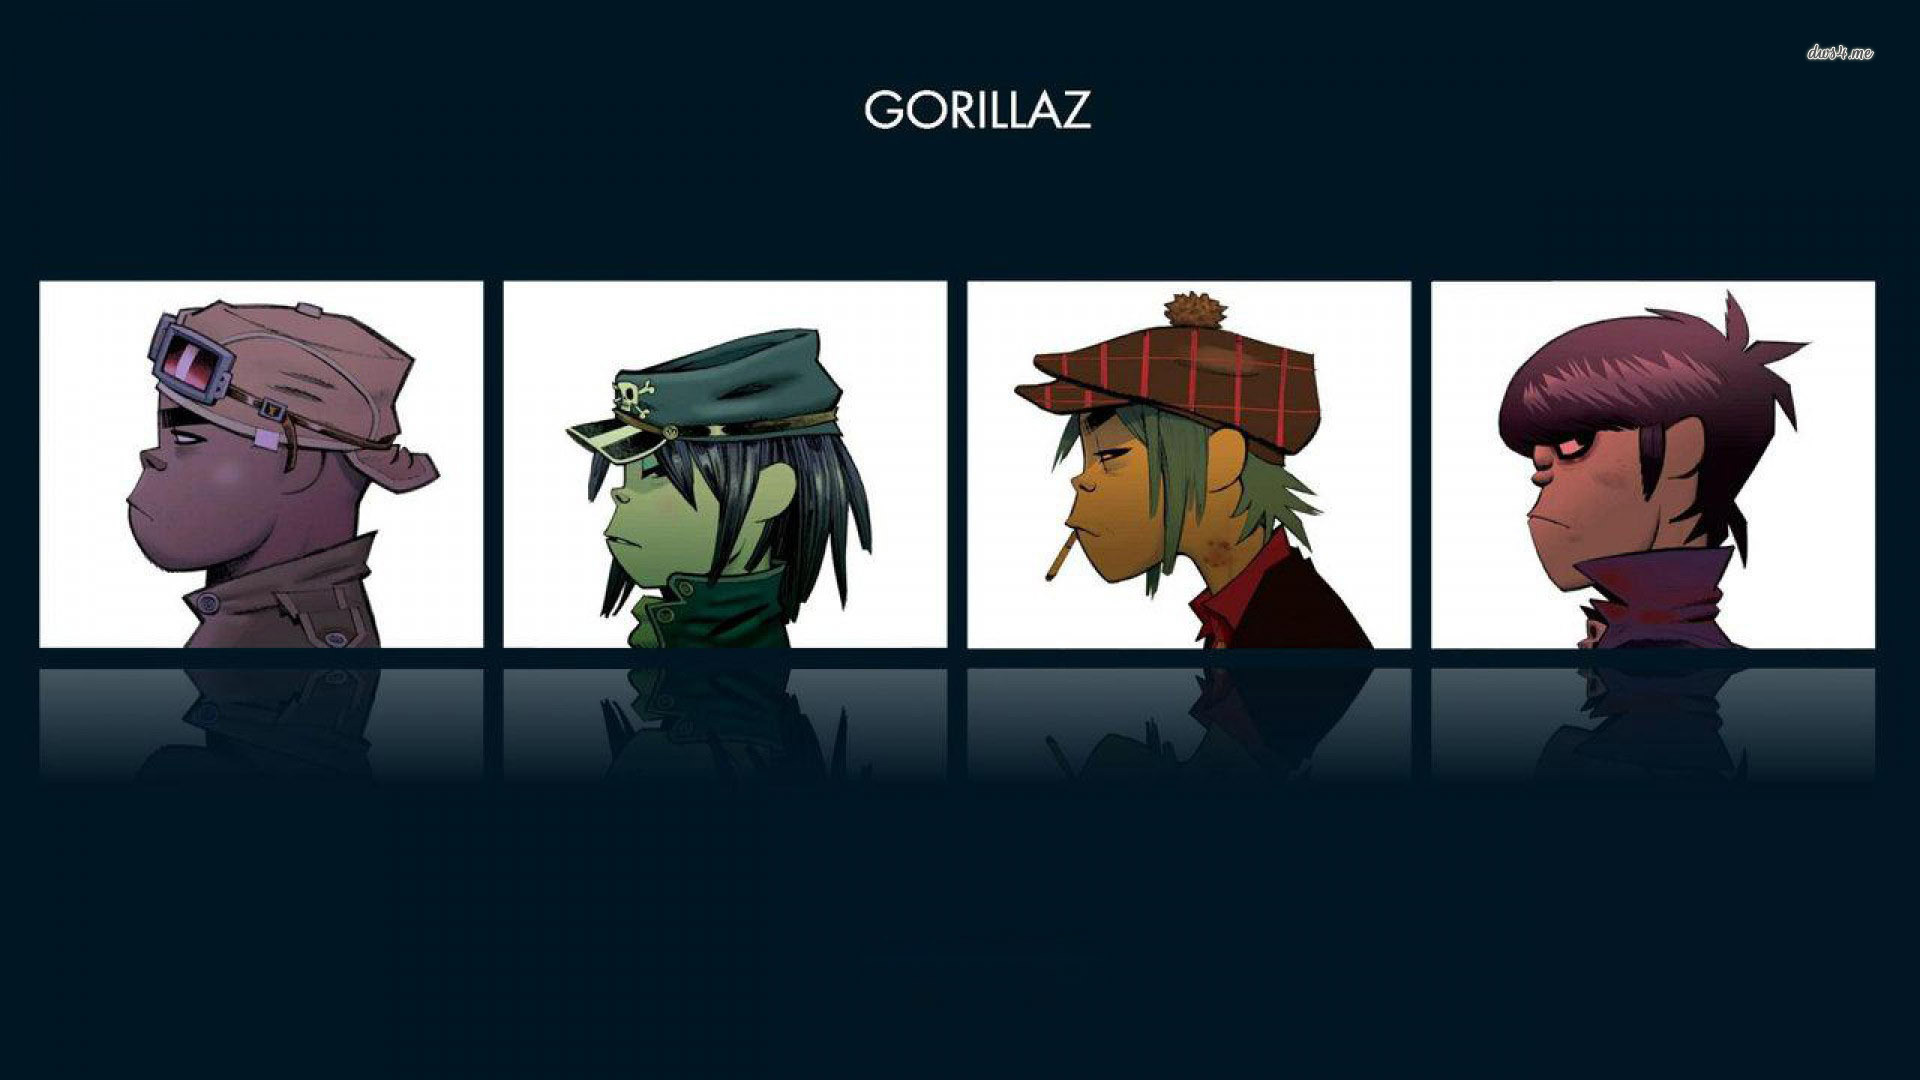 Gorillaz Demon Days - HD Wallpaper 